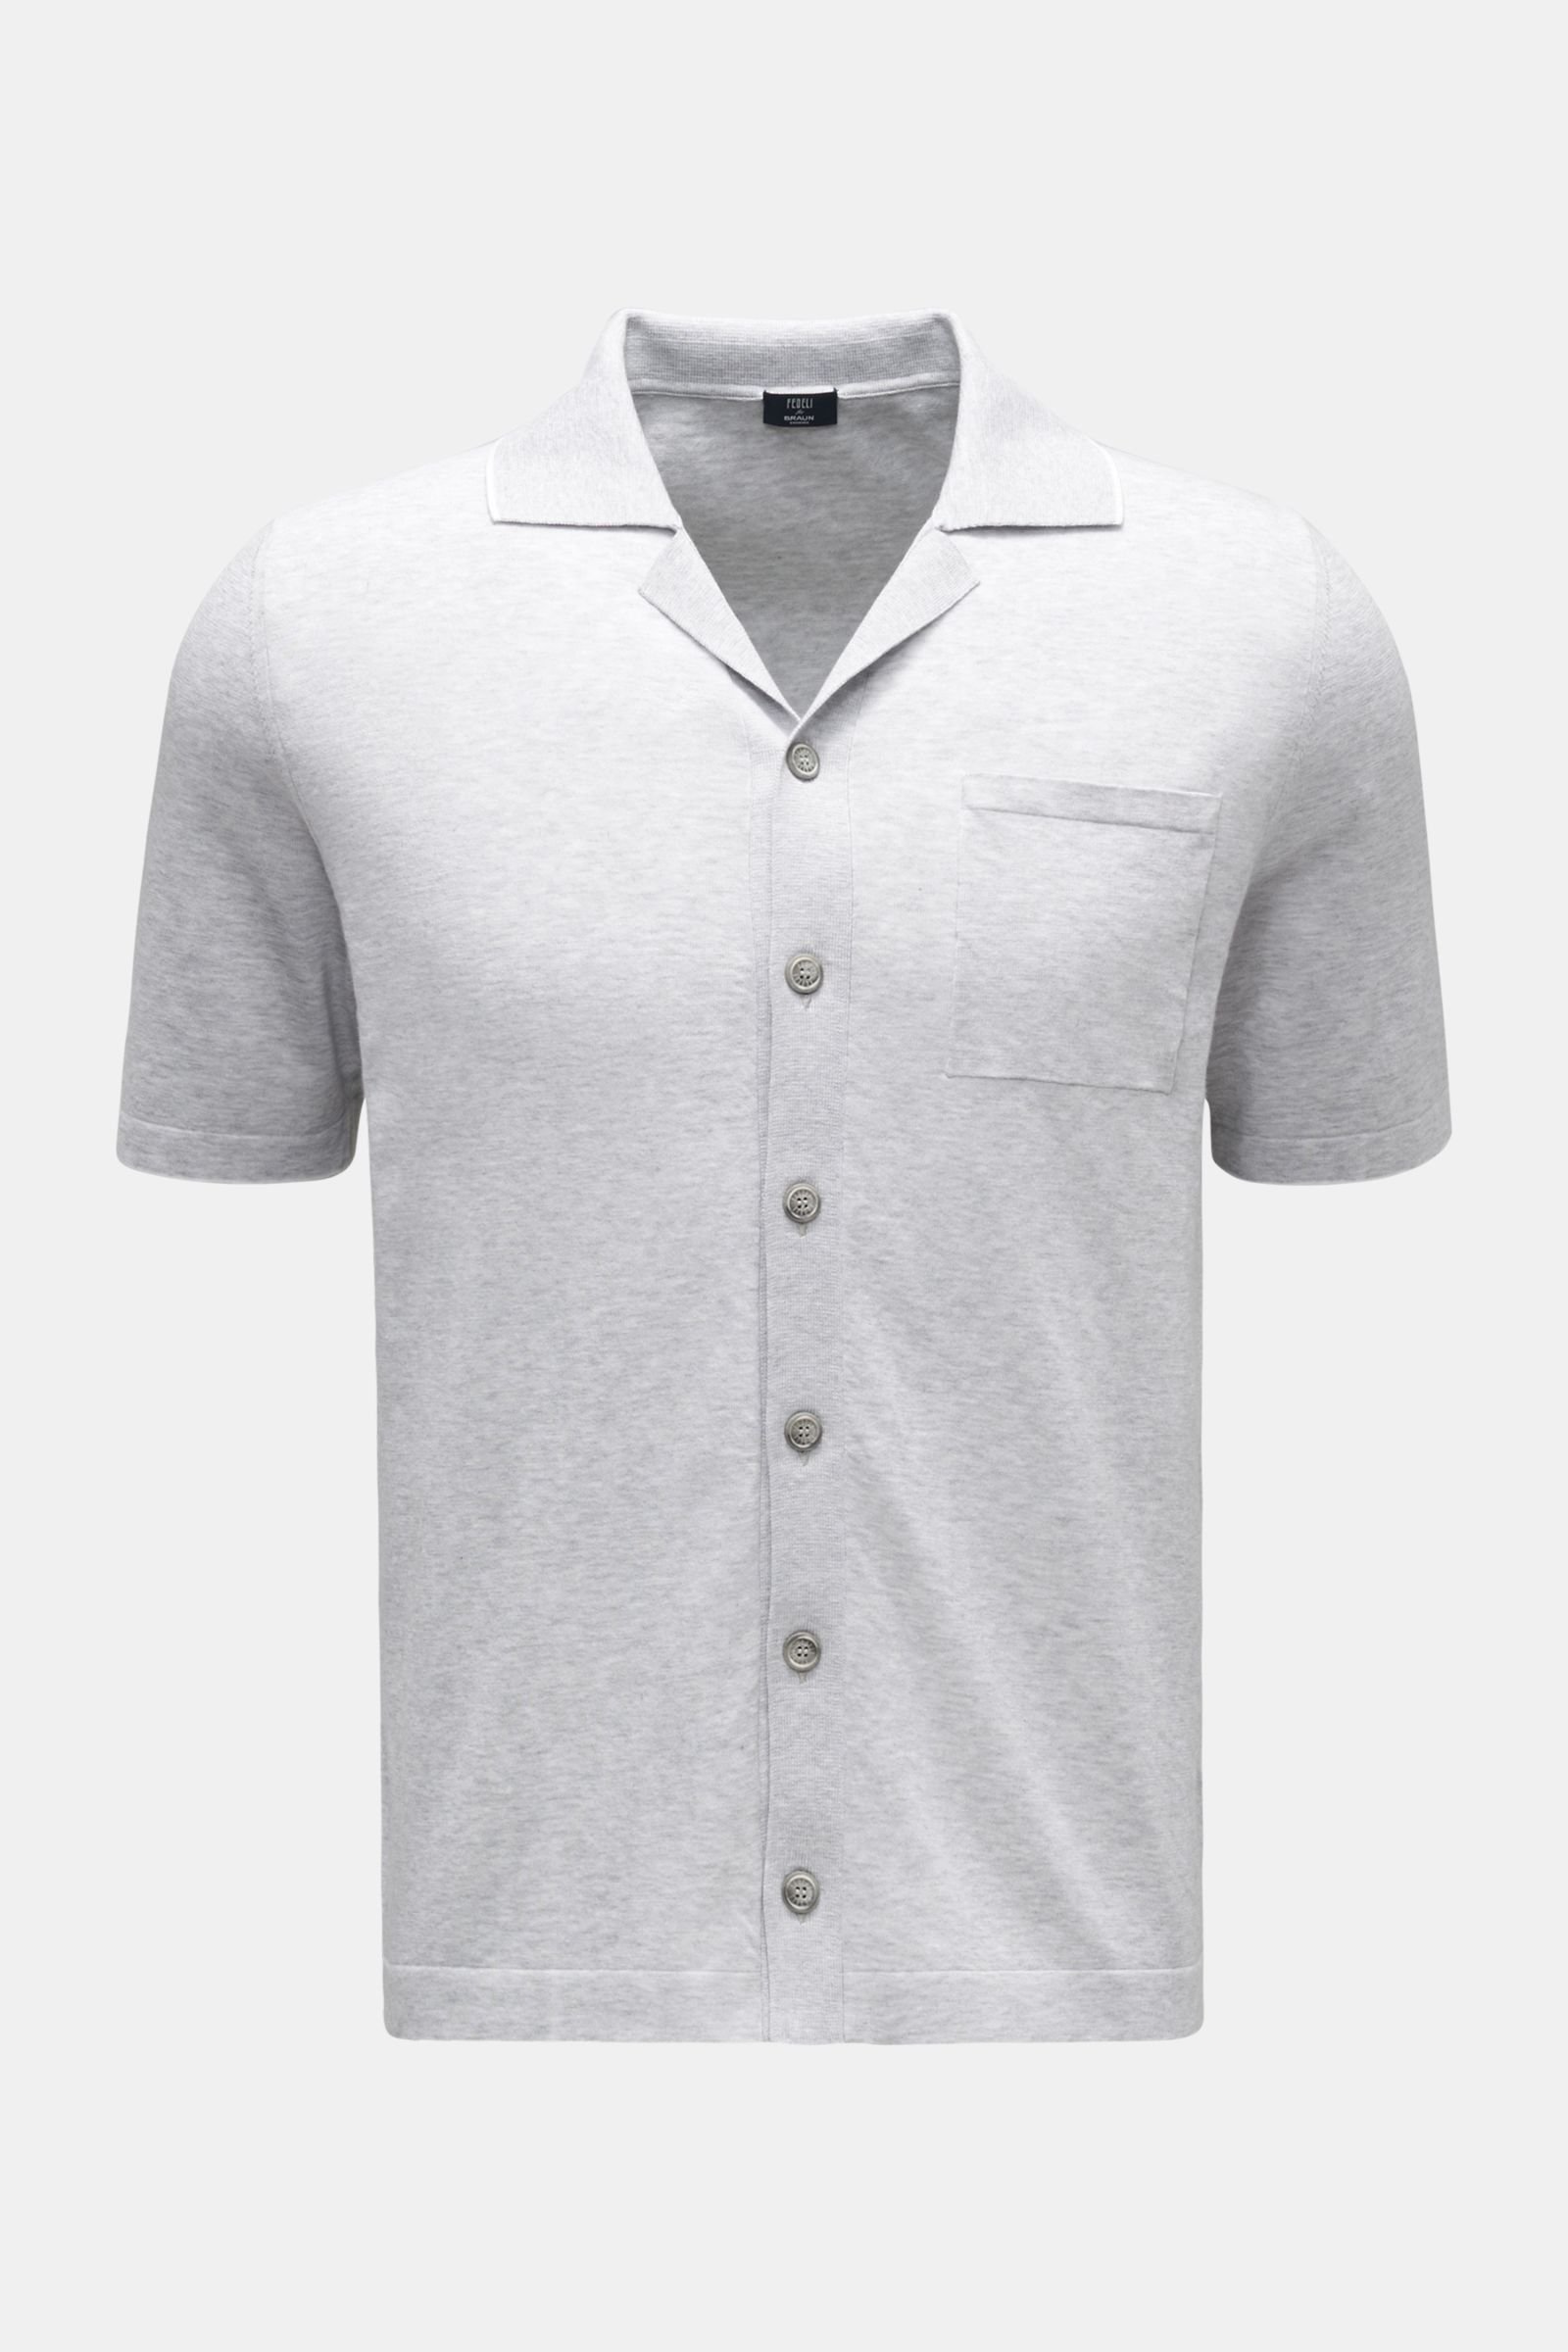 Short sleeve knit shirt 'Jazz' Cuban collar light grey